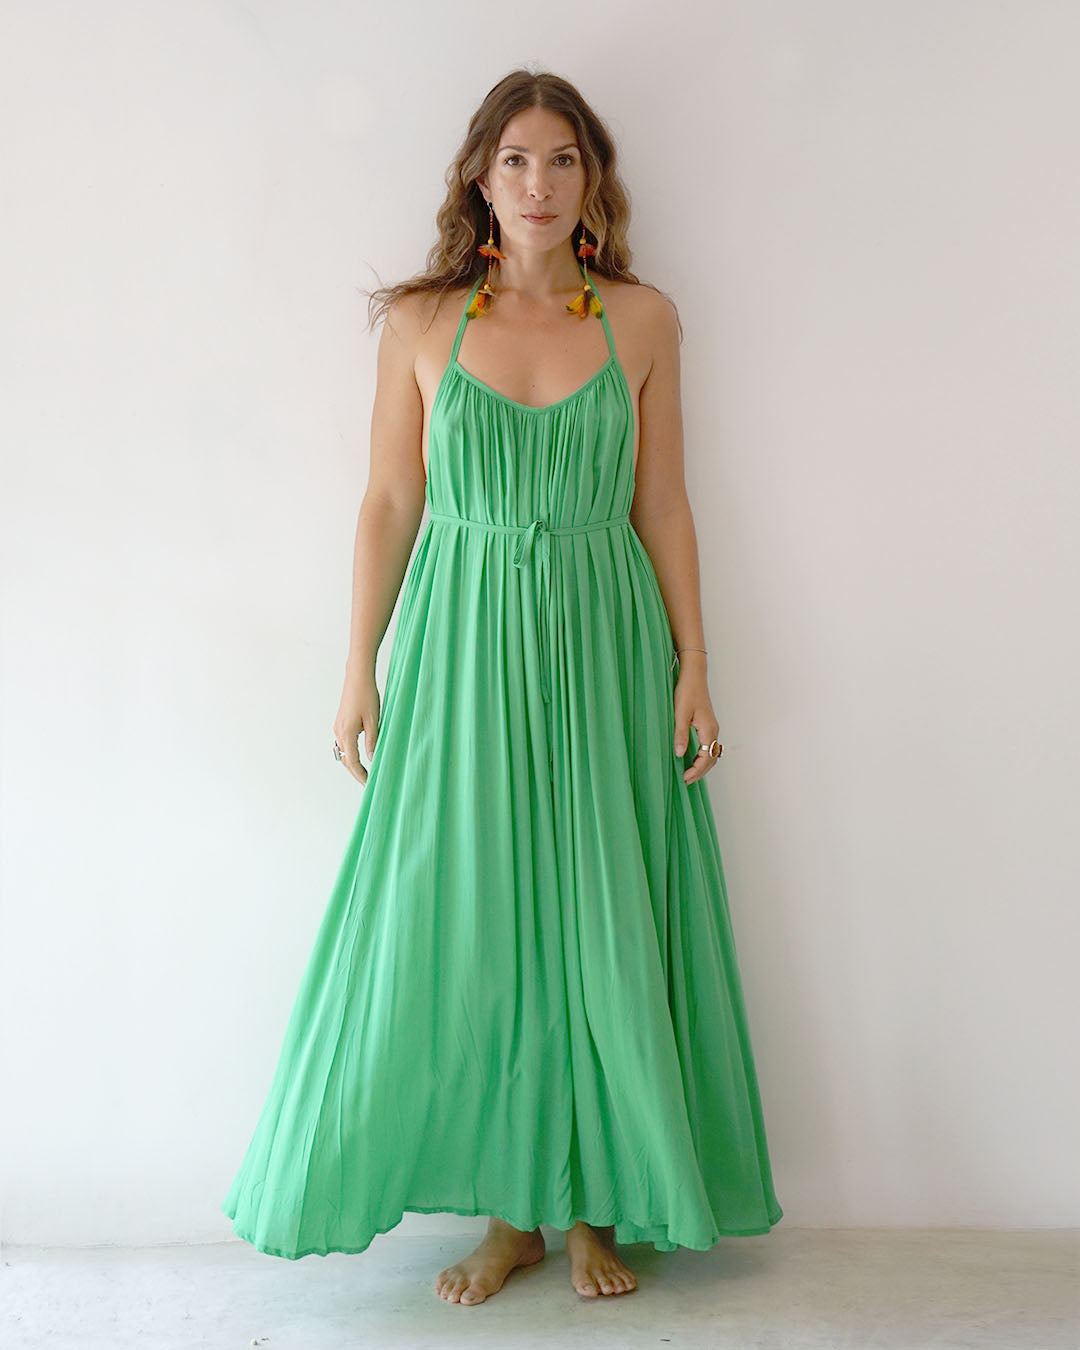 Woman wearing green coloured dress